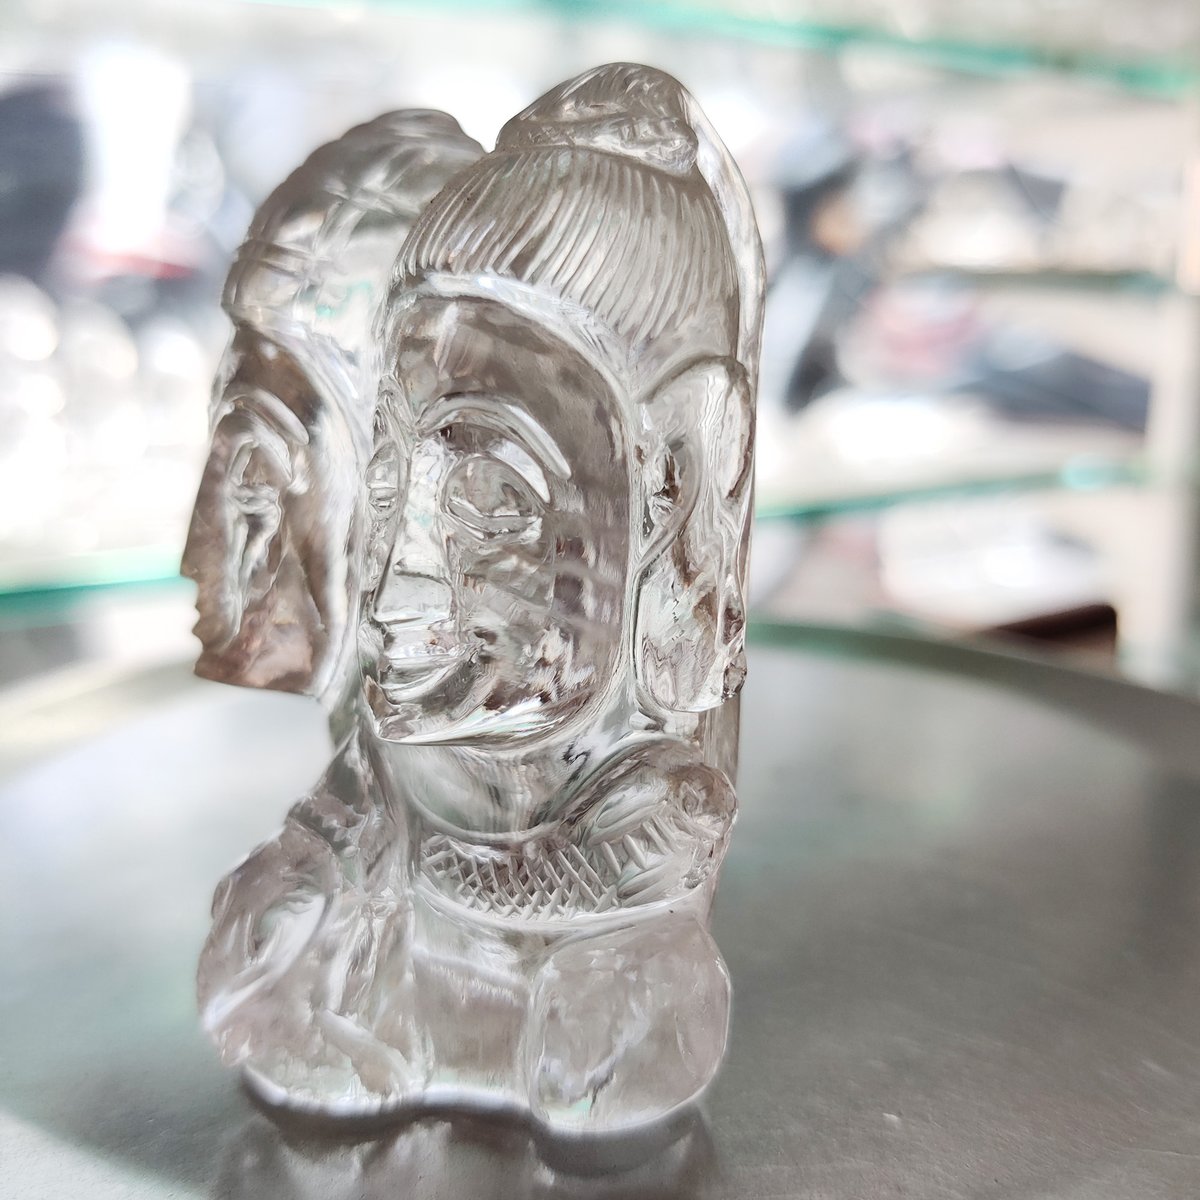 Natural Clear Quartz Shiv family head Statue Crystal Quartz Length: Ganesha/ Parvati/ Shiv : 2.5x2' / Weight : 106 gm ebay.com/itm/1451181442… #crystalquartzshivji #quartzshivfamily #poojamandir #quartzparvati #quartzganesha #quartznandi #quartzfigurine #handmadegift #GodStatues